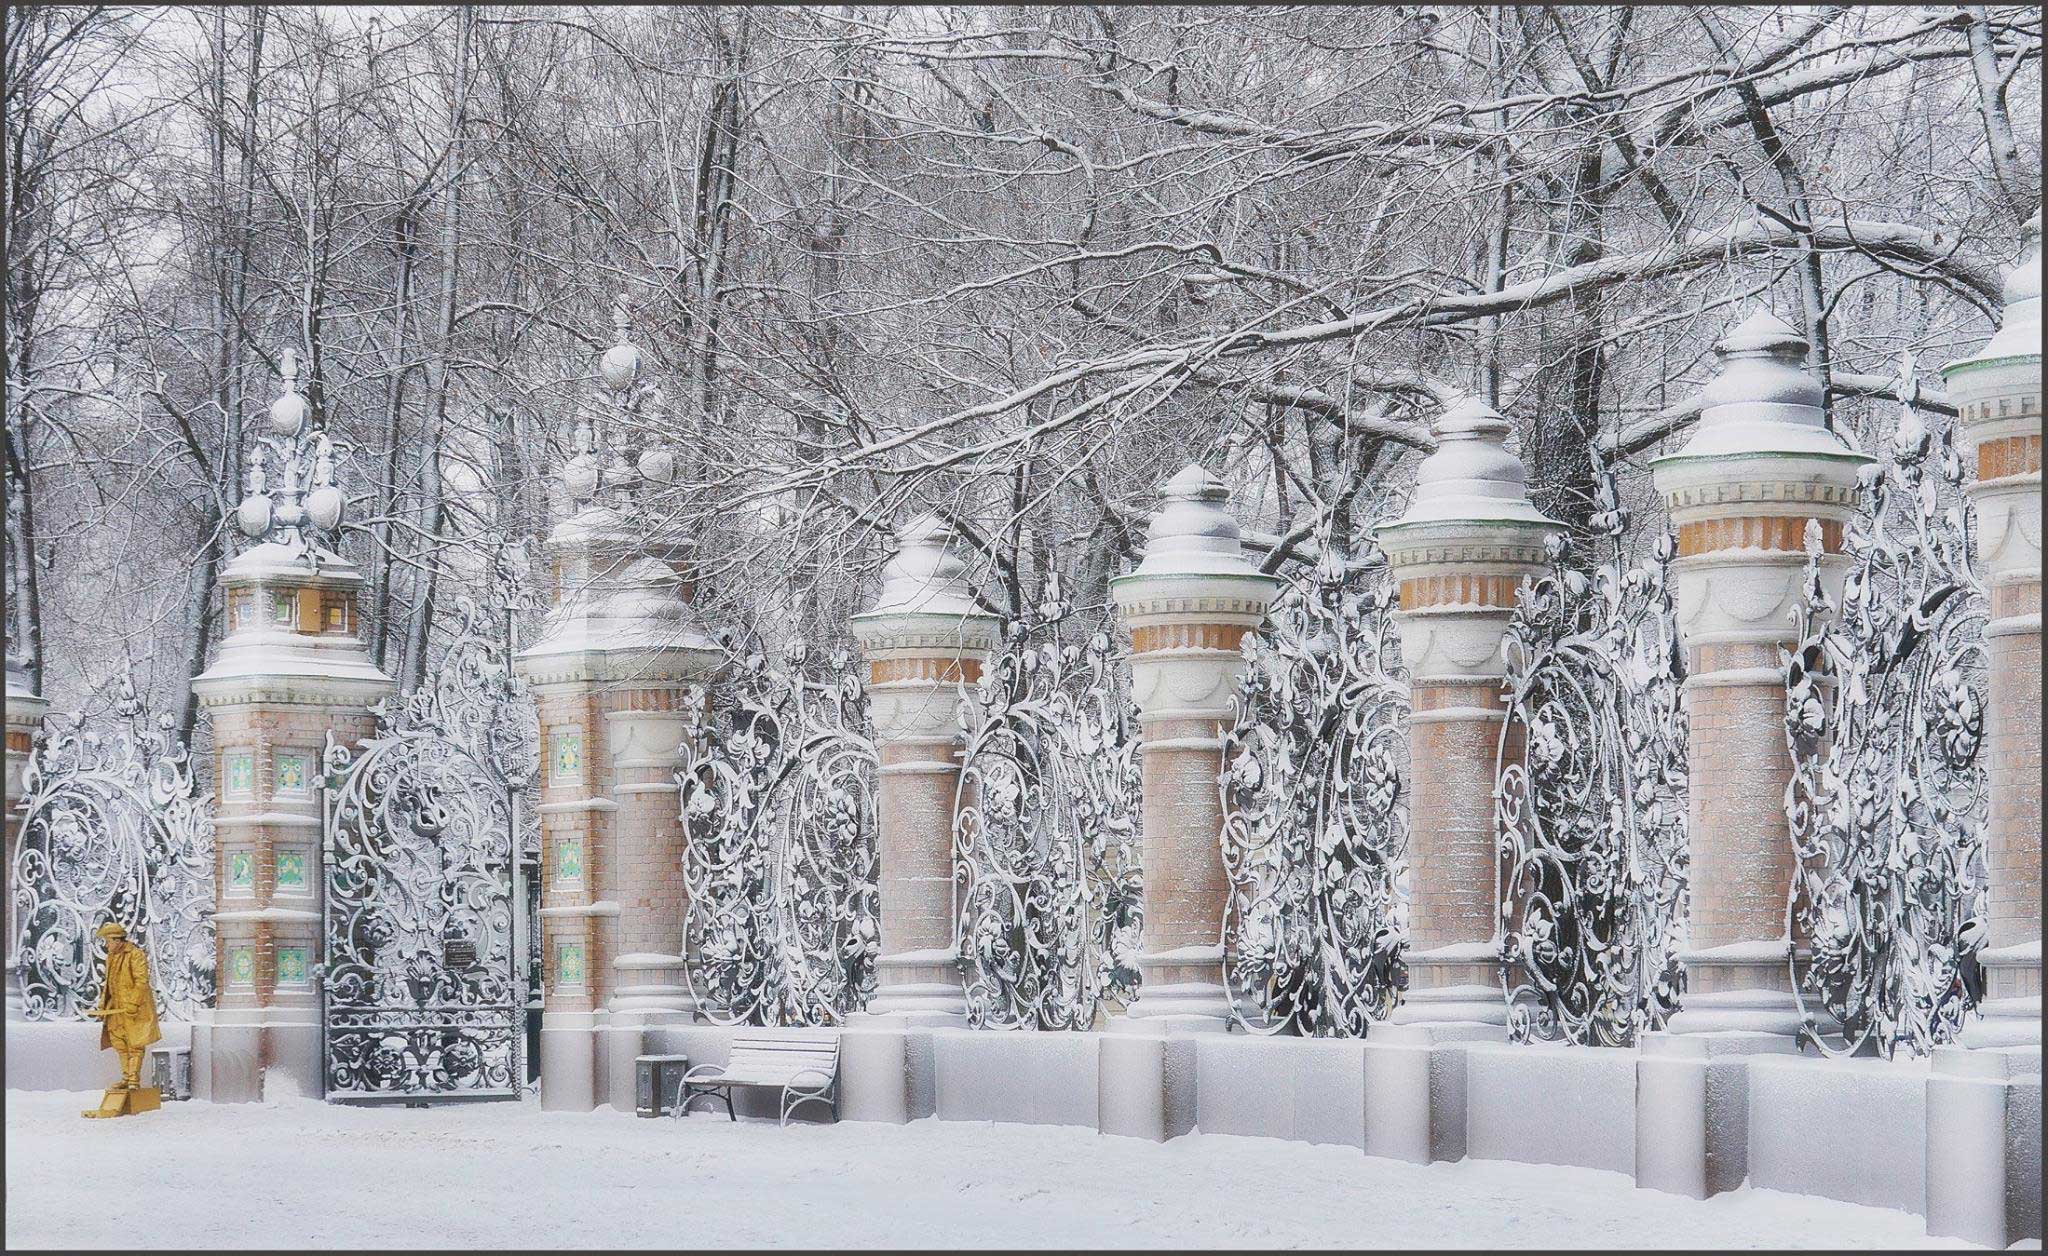 The fence of the Mikhailovsky Garden in winter